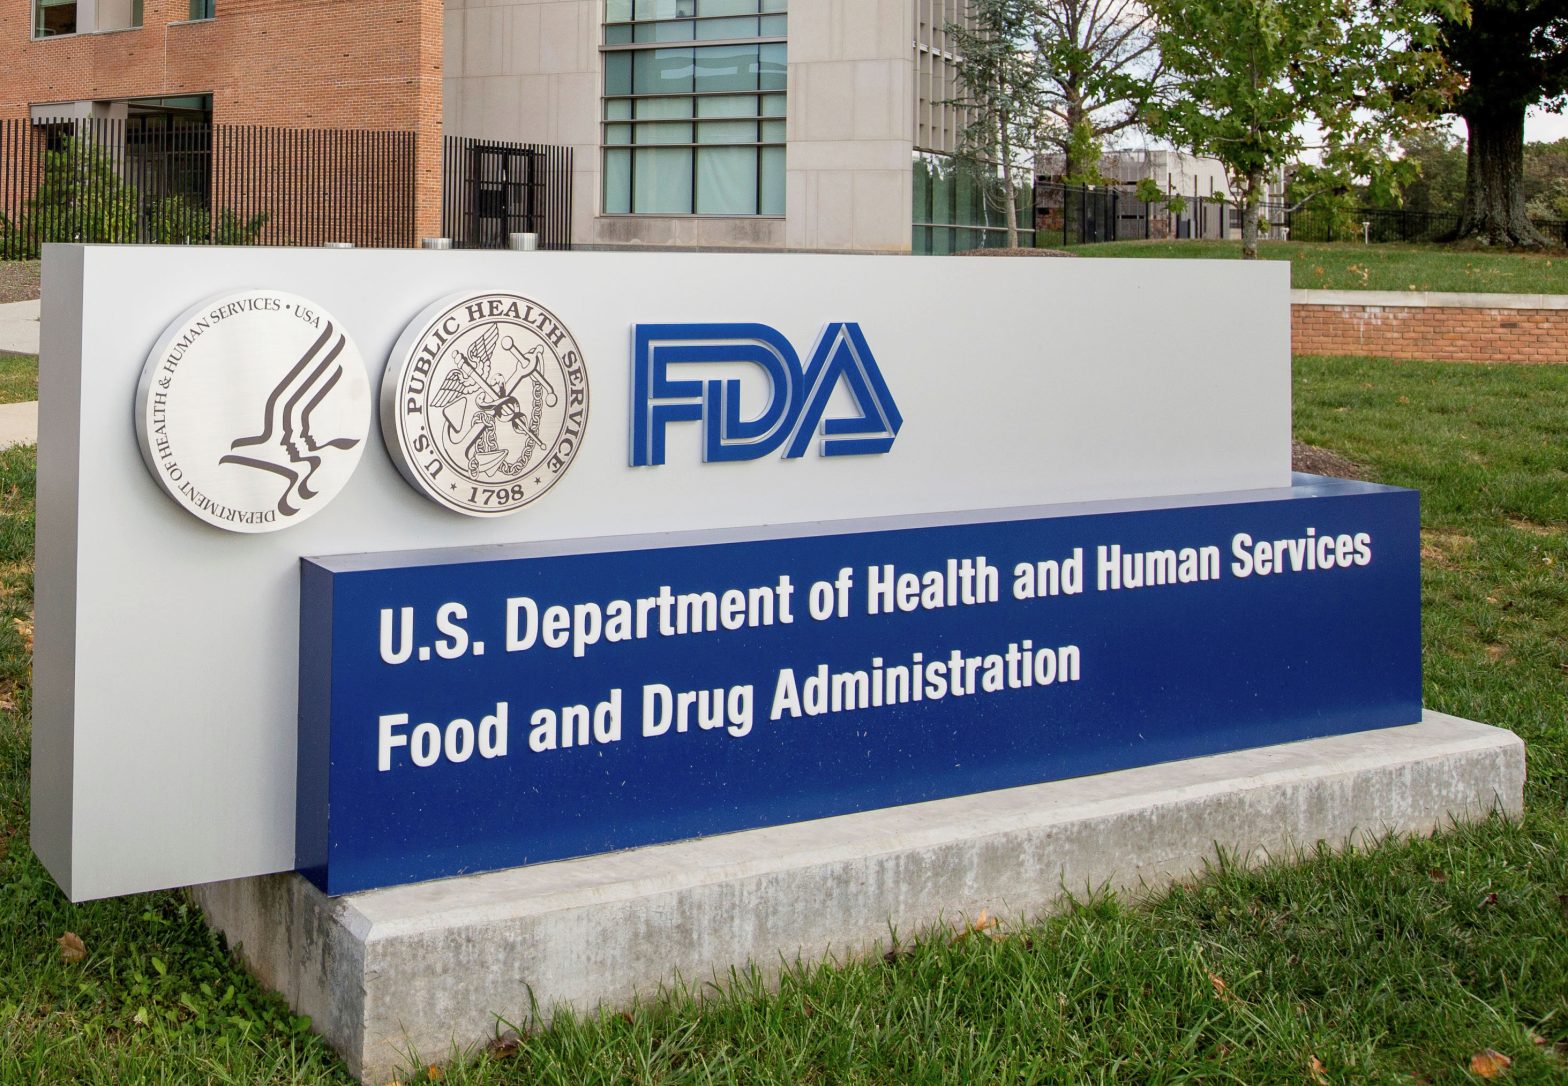 FDA and DOJ Pledge More Cooperation on Illegal E-Cigarettes Ahead of Congressional Hearing